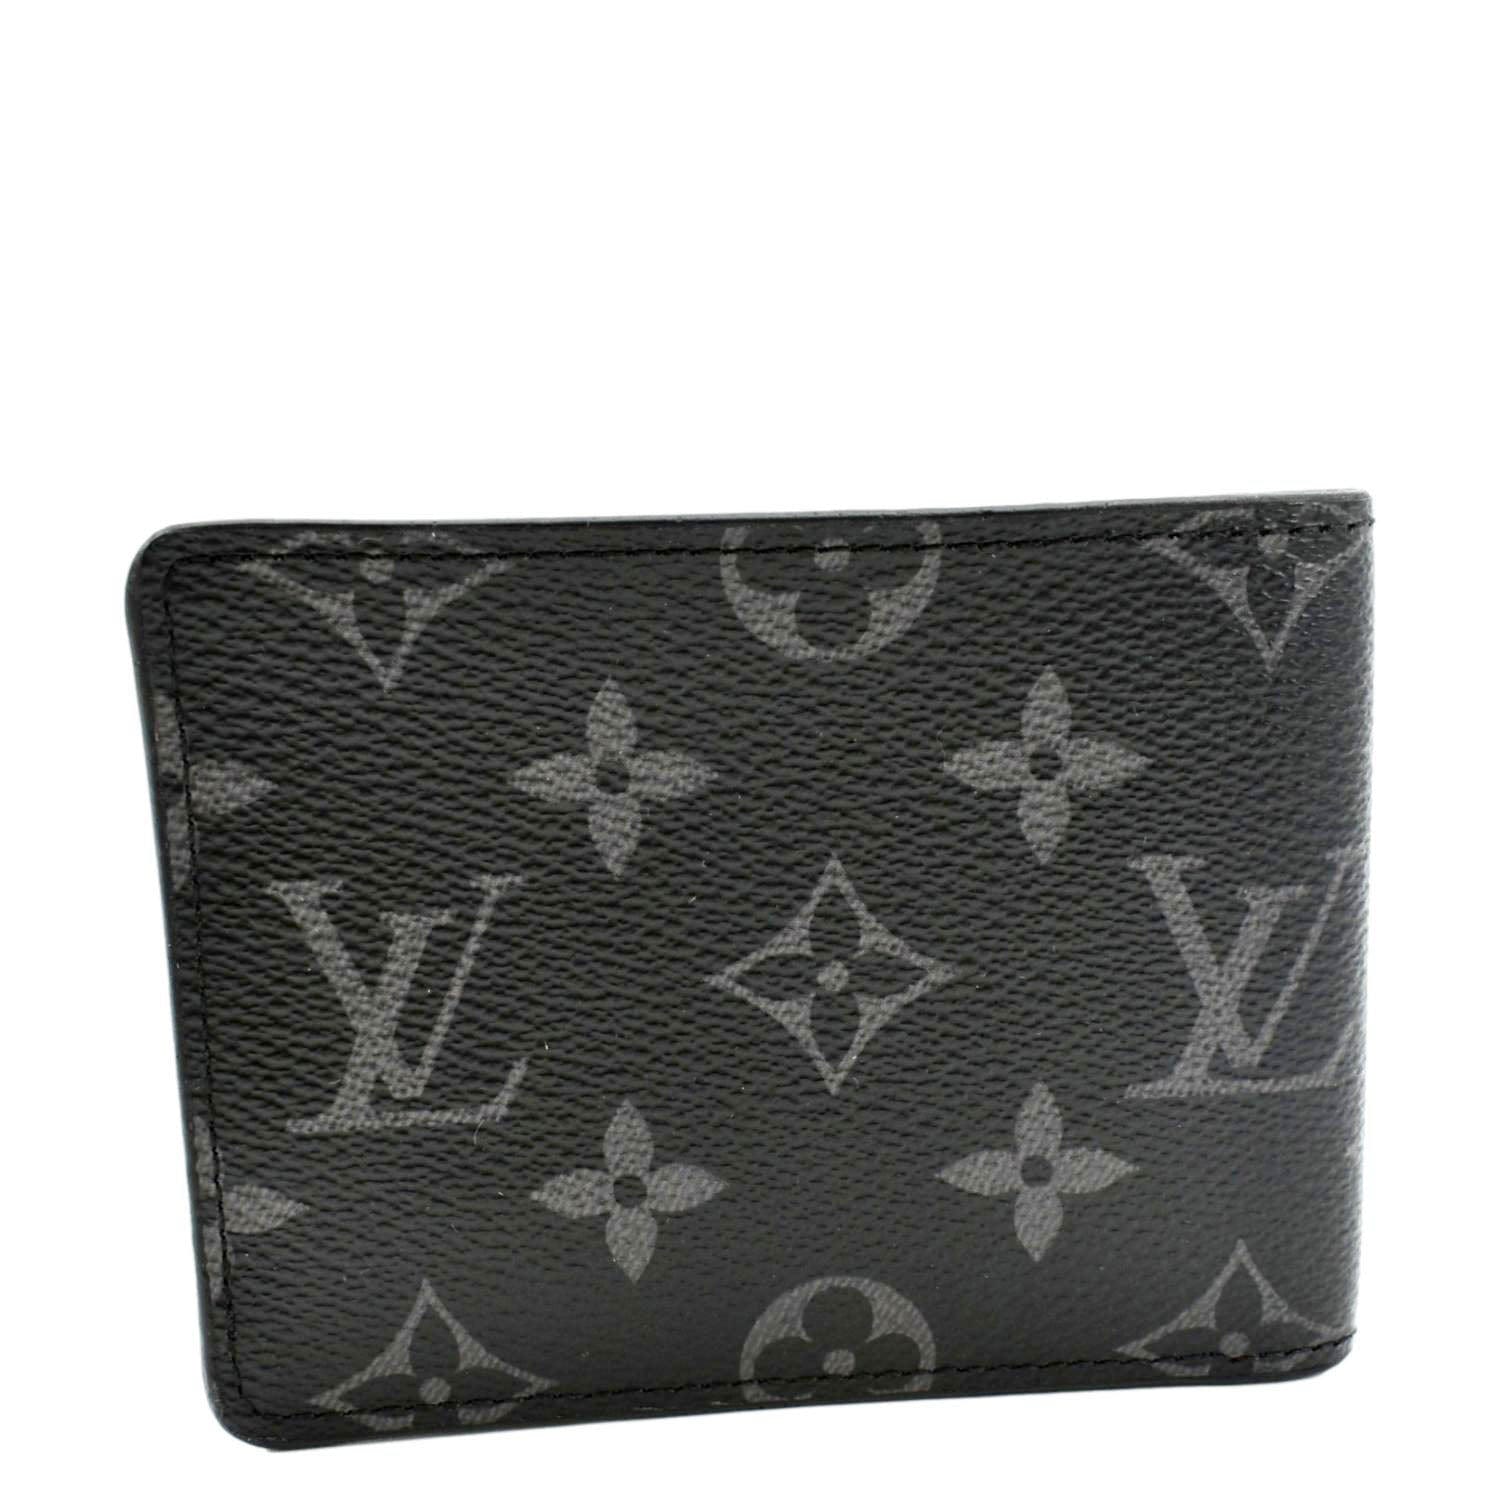 monogram lv wallet black